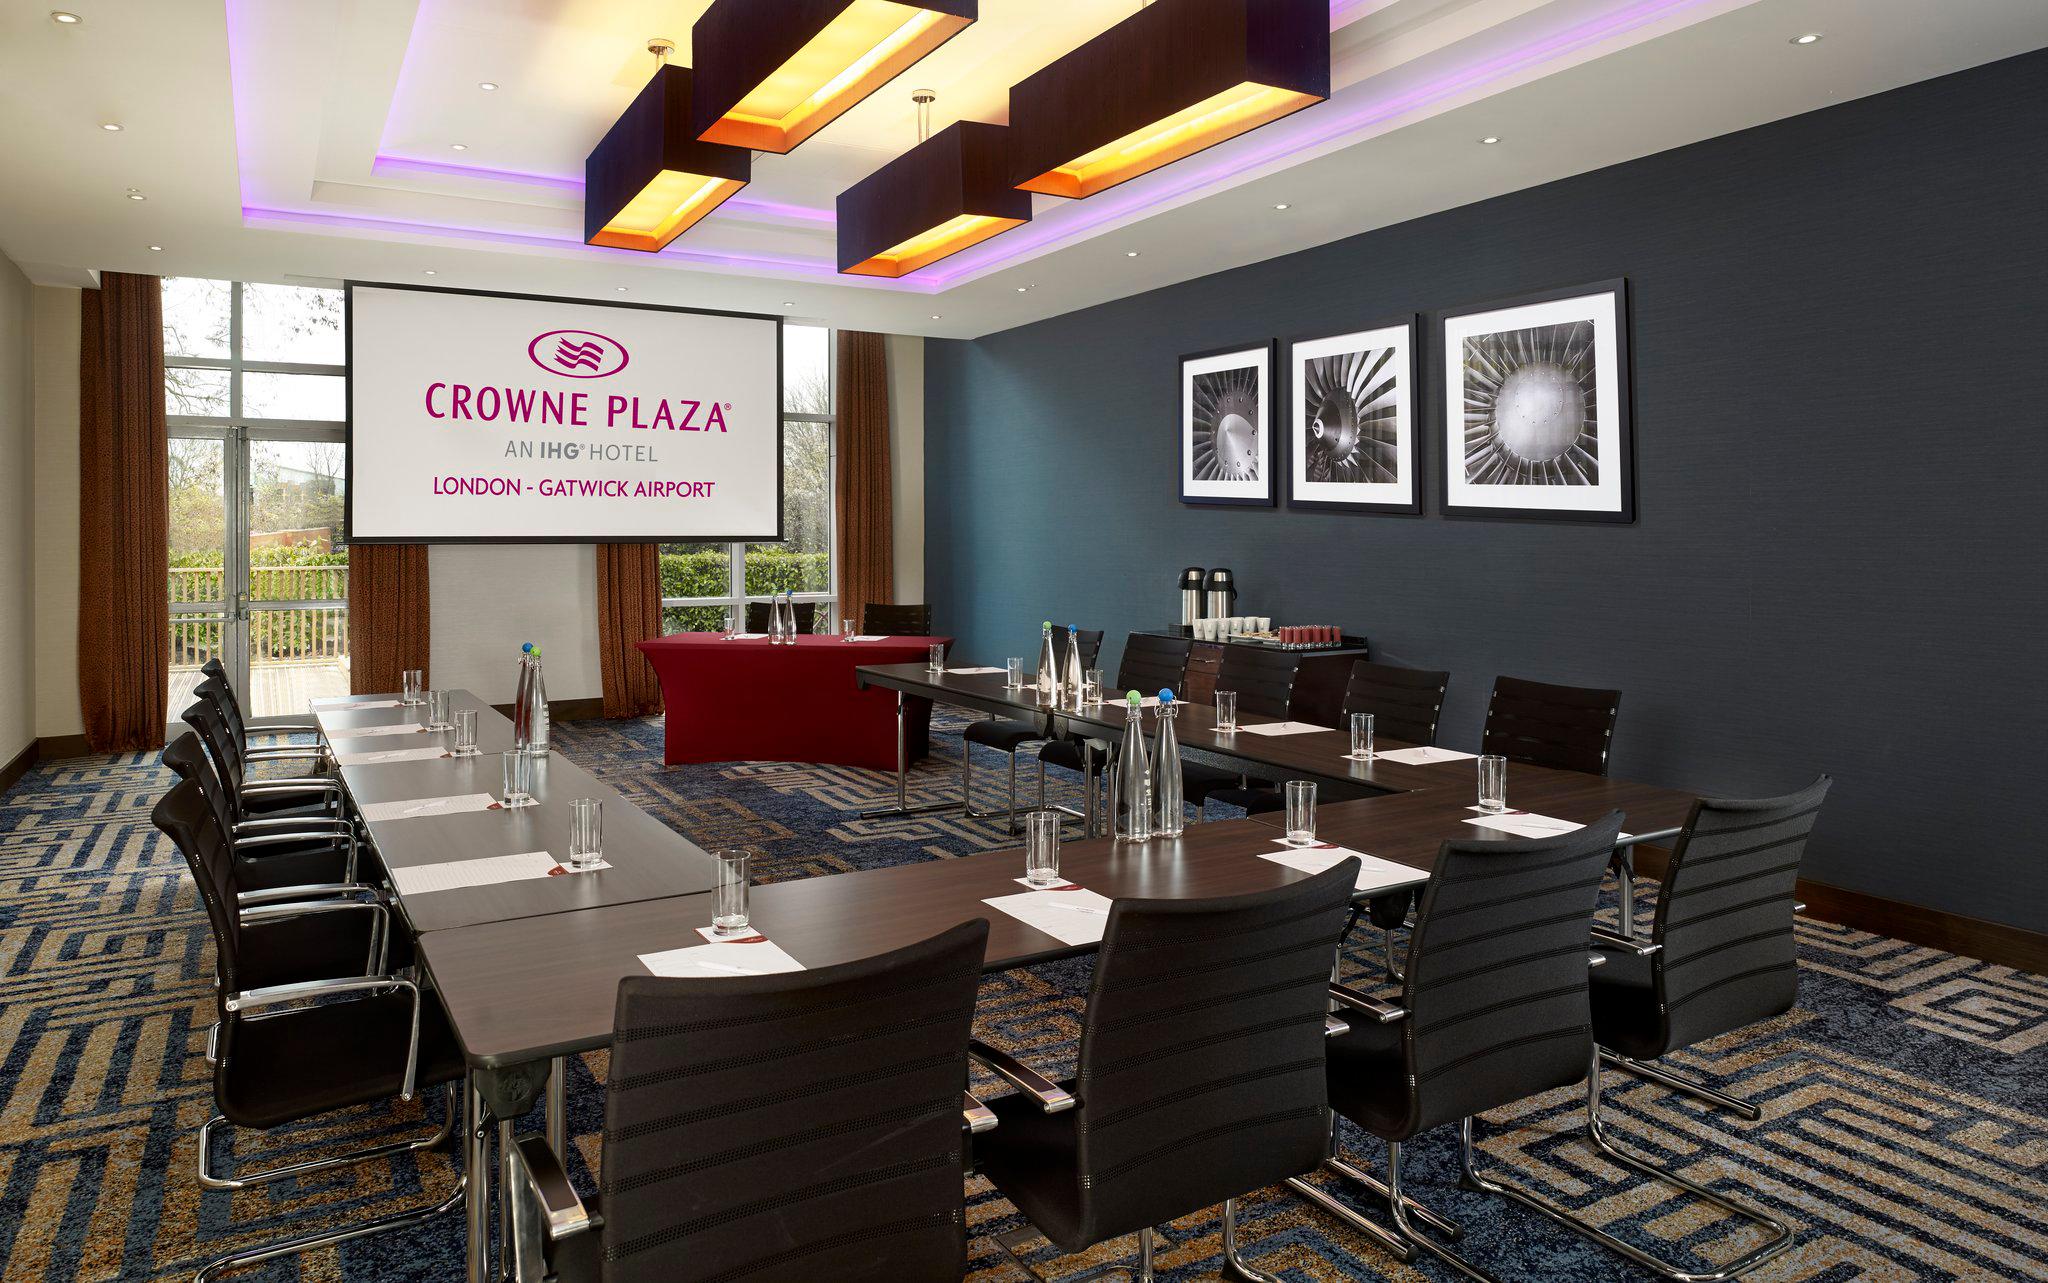 Crowne Plaza London - Gatwick Airport, an IHG Hotel Crawley 01293 608608